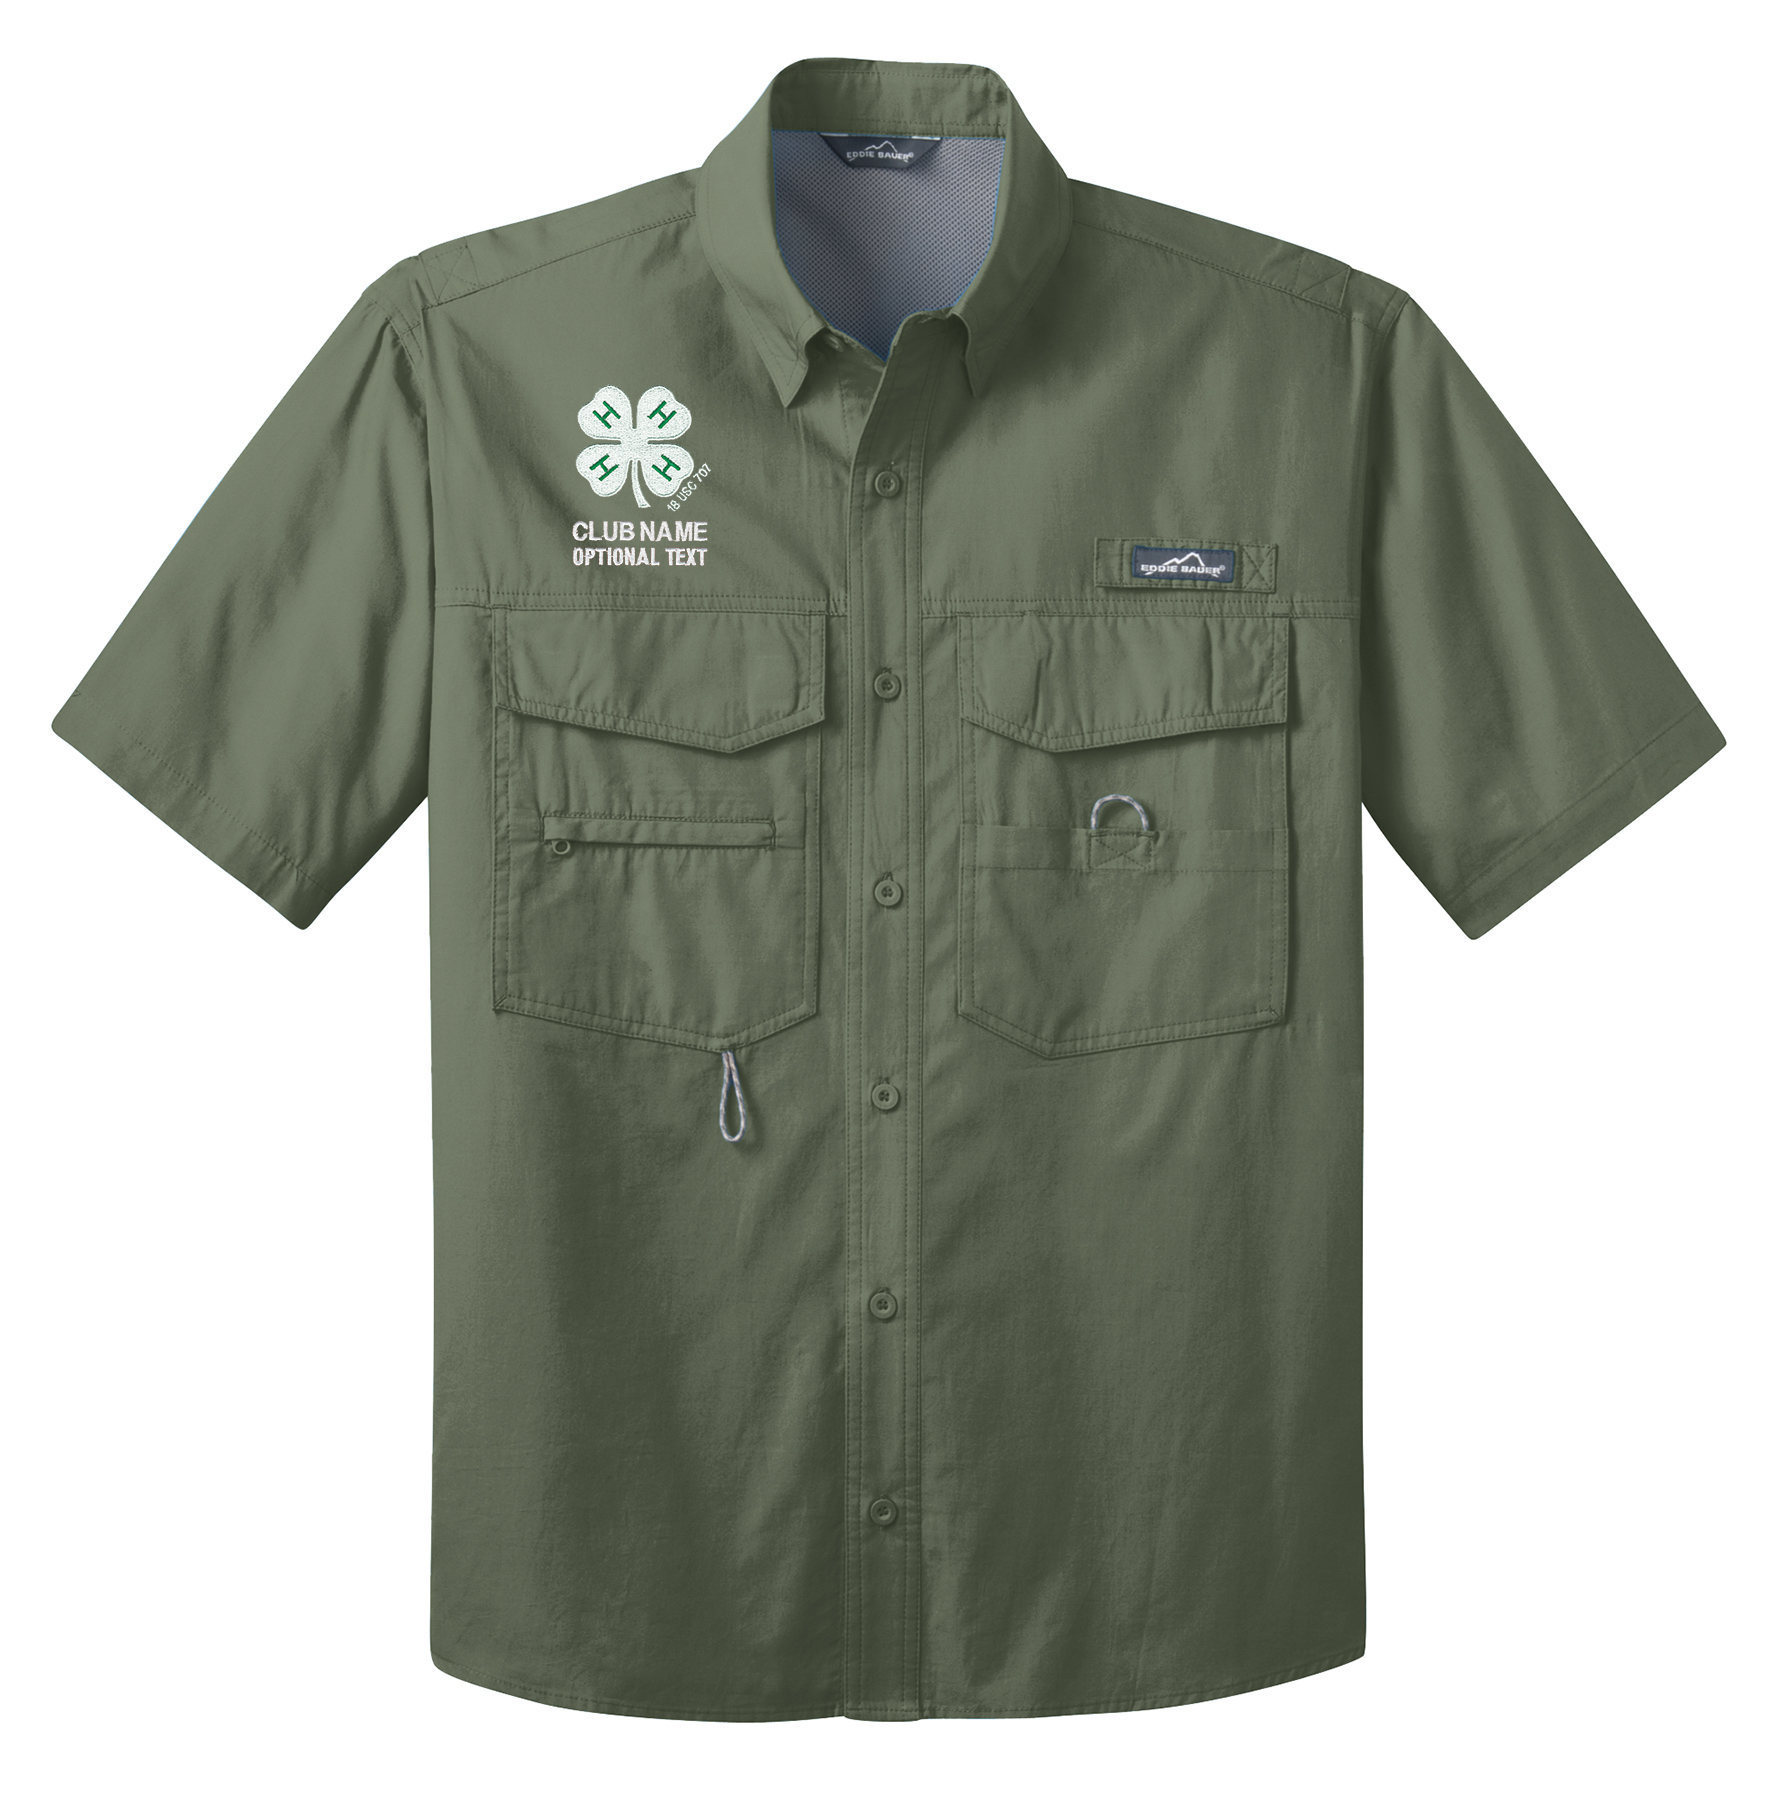 Eddie Bauer – Short Sleeve Fishing Shirt with Embroidered 4-H Logo - Seagrass Green, Medium